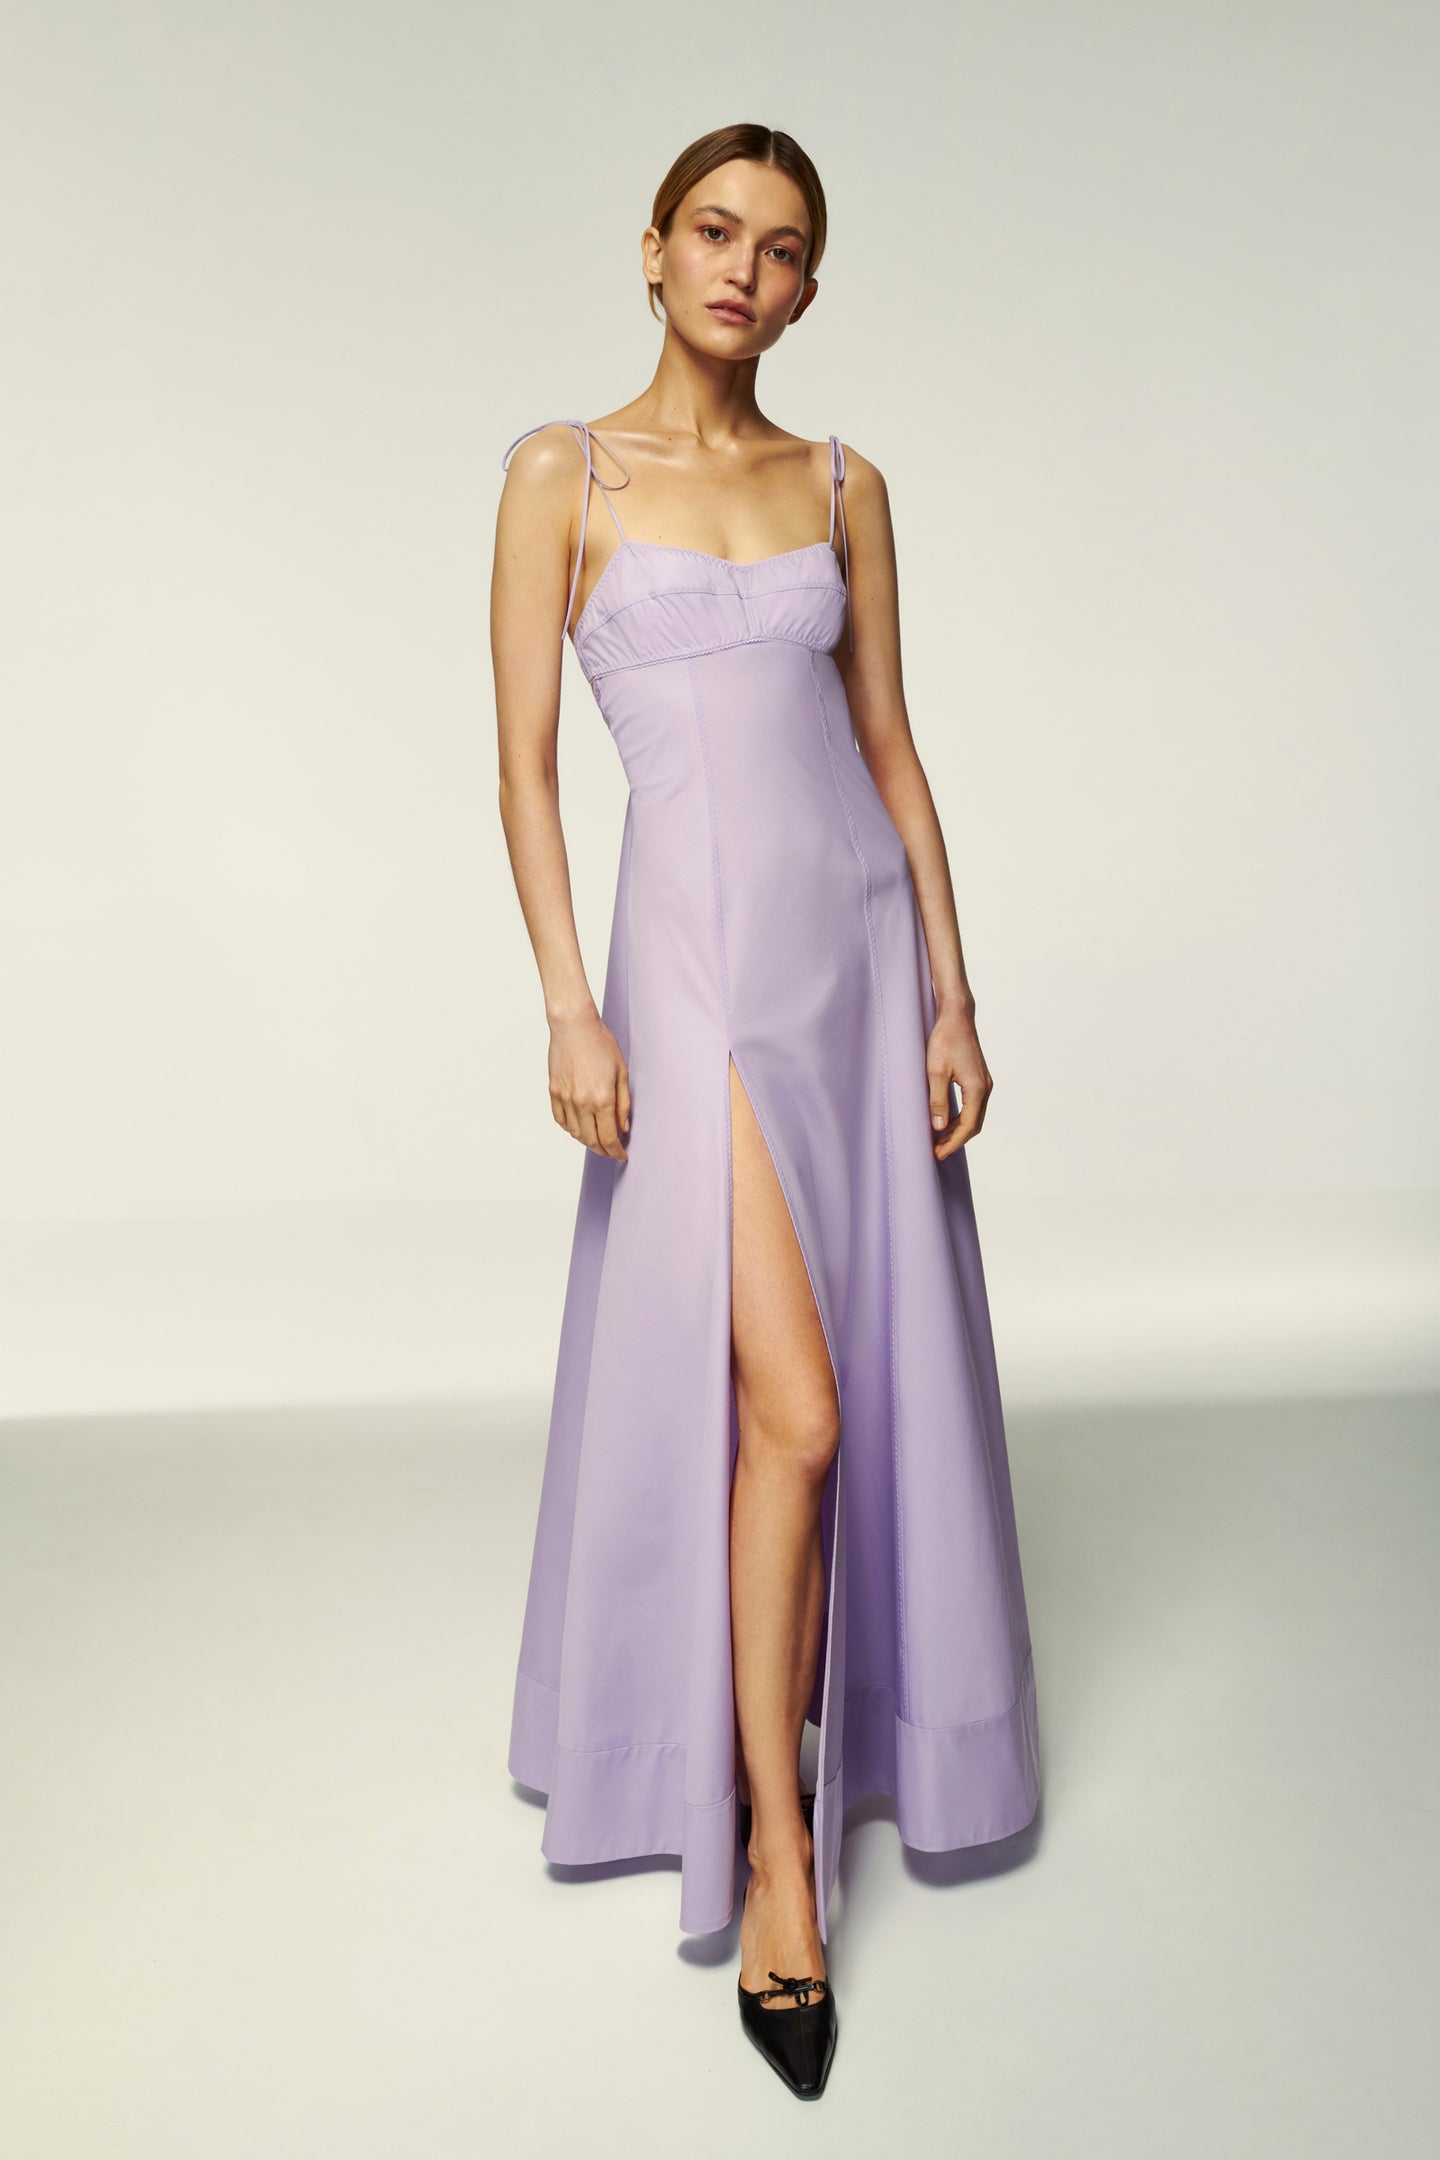 Model in lavender Libertine dress